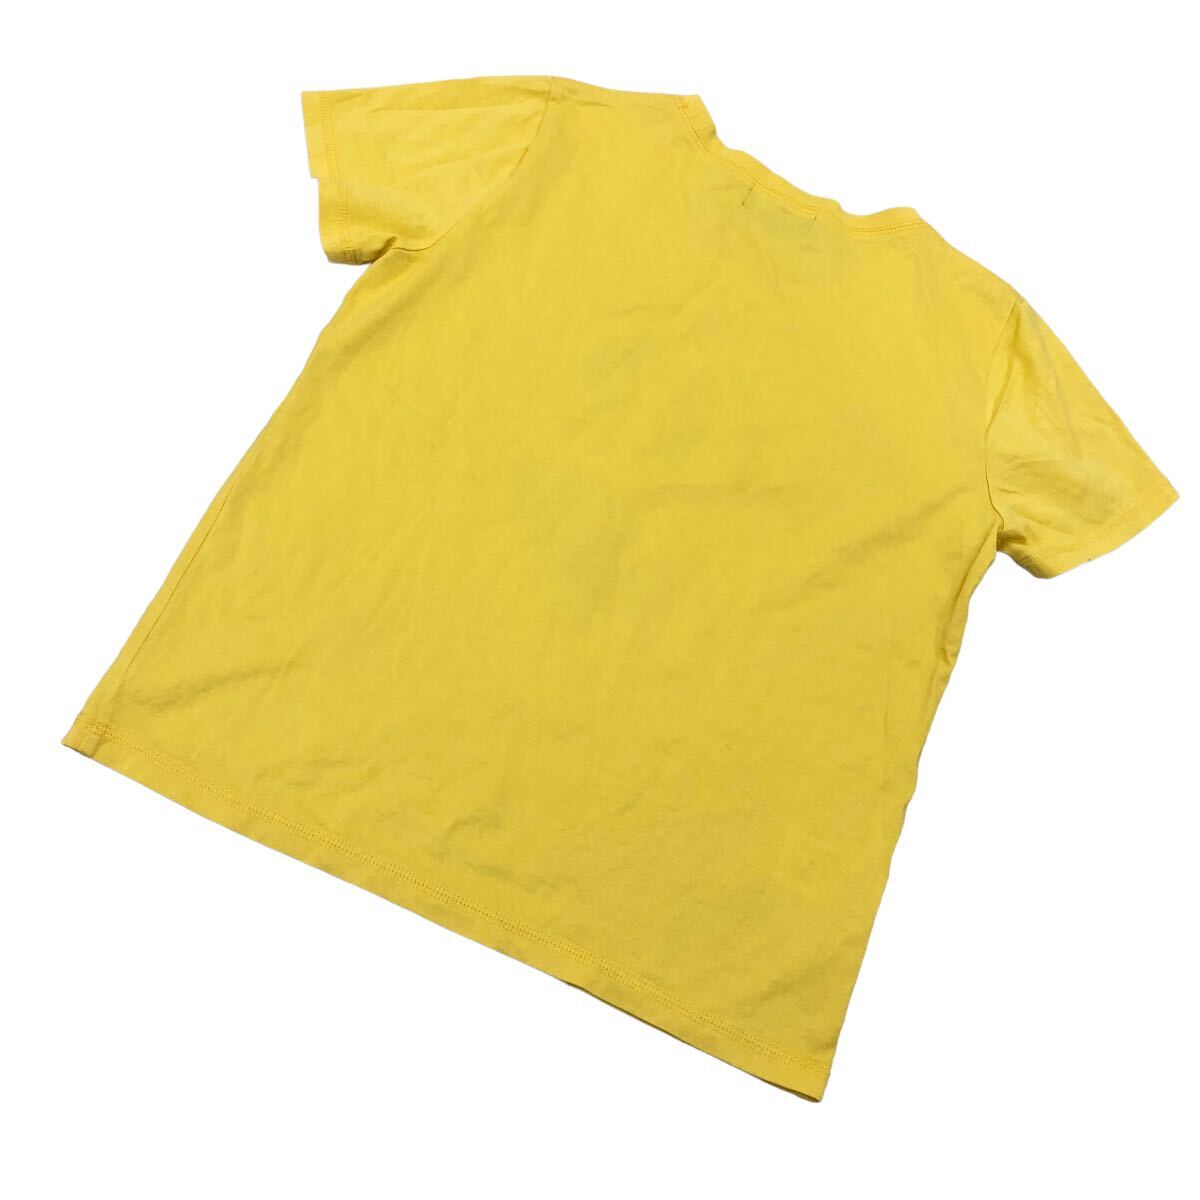 NS133 SONIA RYKIEL ソニアリキエル Tシャツ 半袖Tシャツ トップス 半袖 綿100% レディース 40 イエロー 黄色_画像5